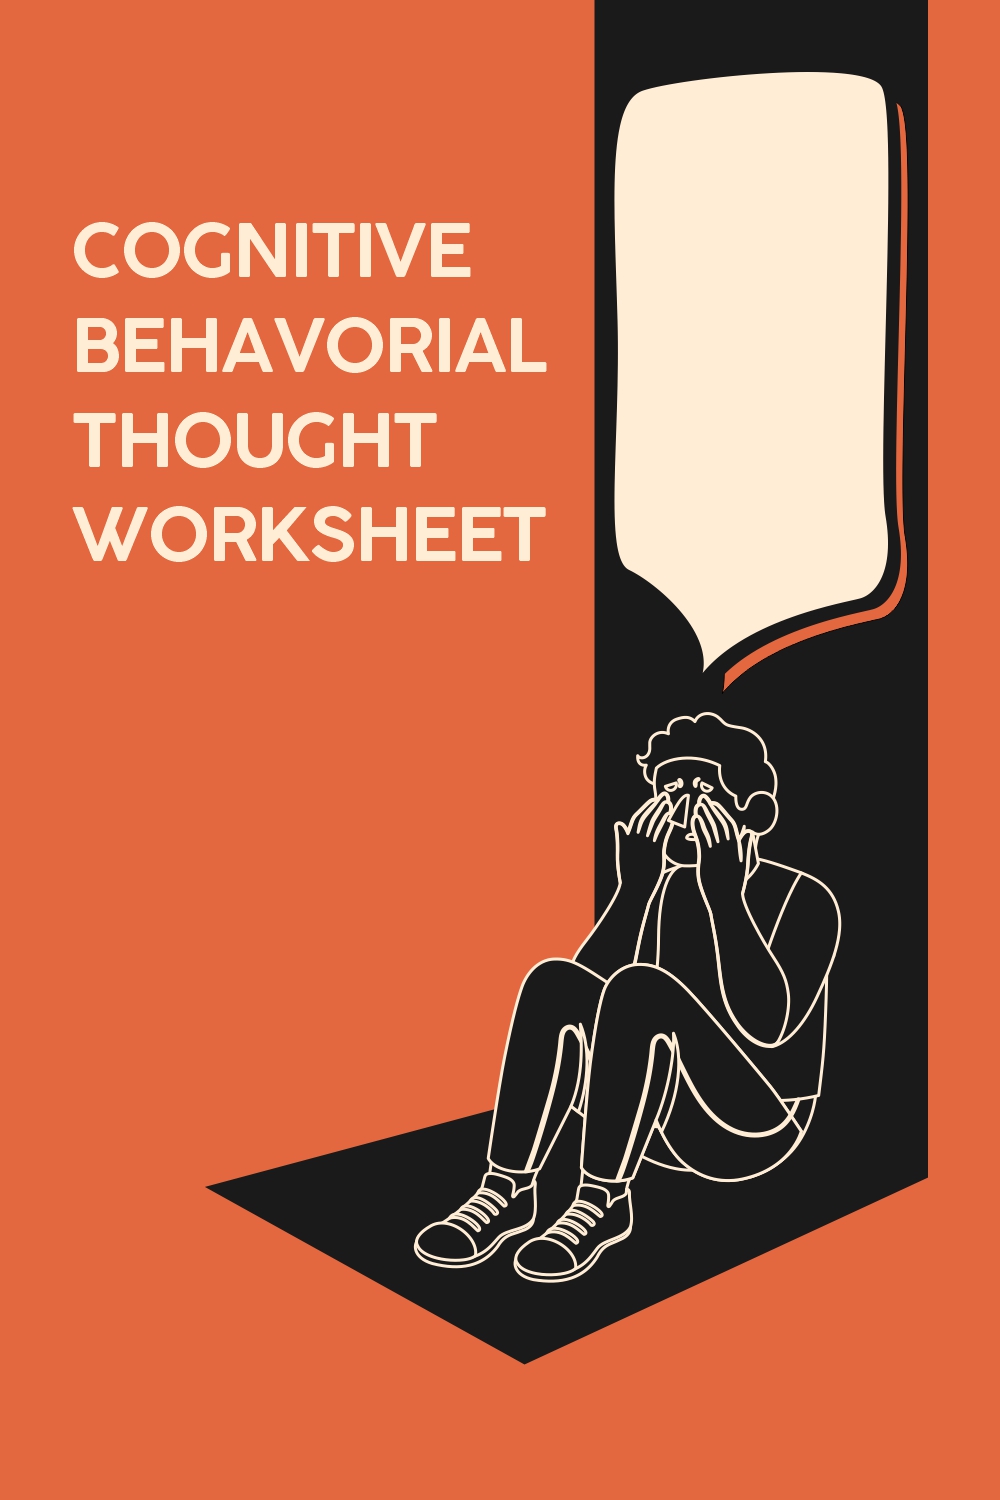 17 Images of Cognitive Behavioral Thought Worksheets